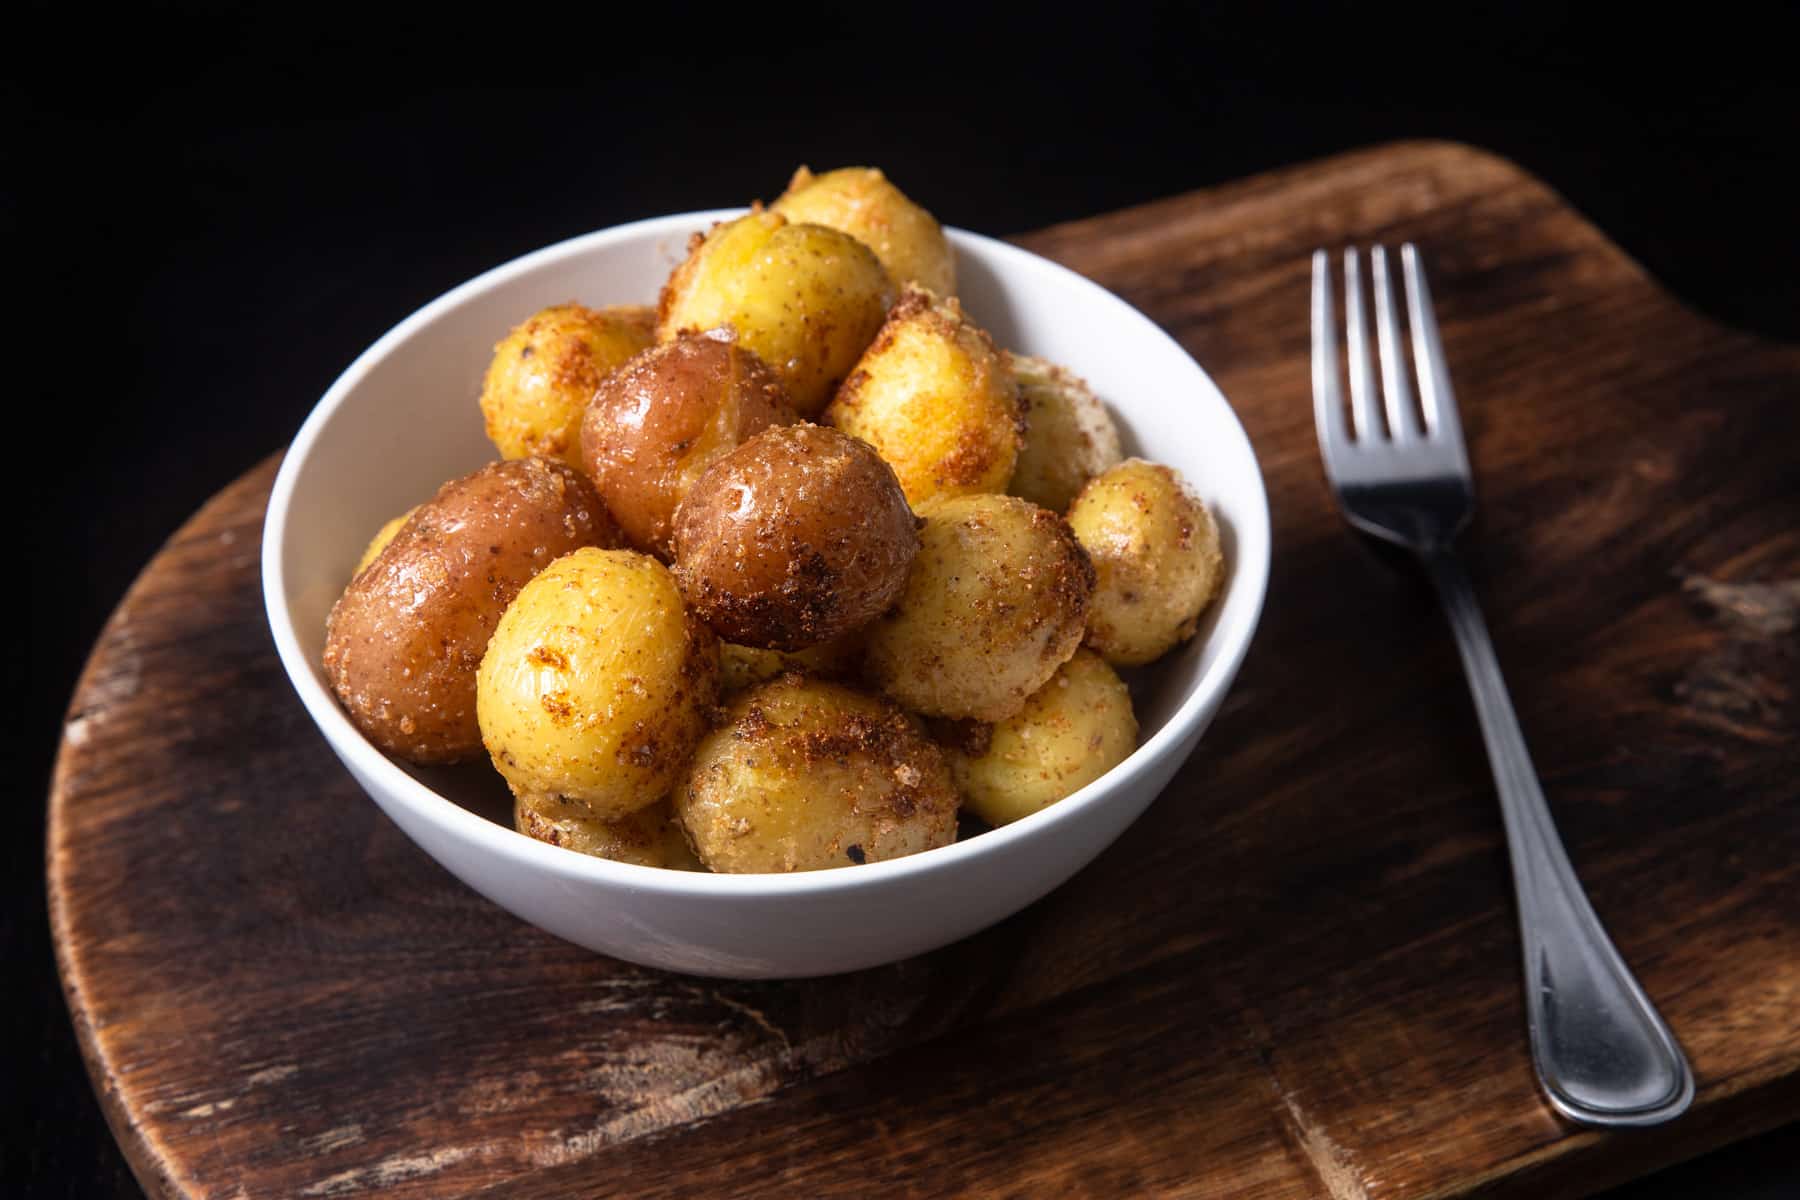 https://www.pressurecookrecipes.com/wp-content/uploads/2018/11/instant-pot-roasted-potatoes.jpg